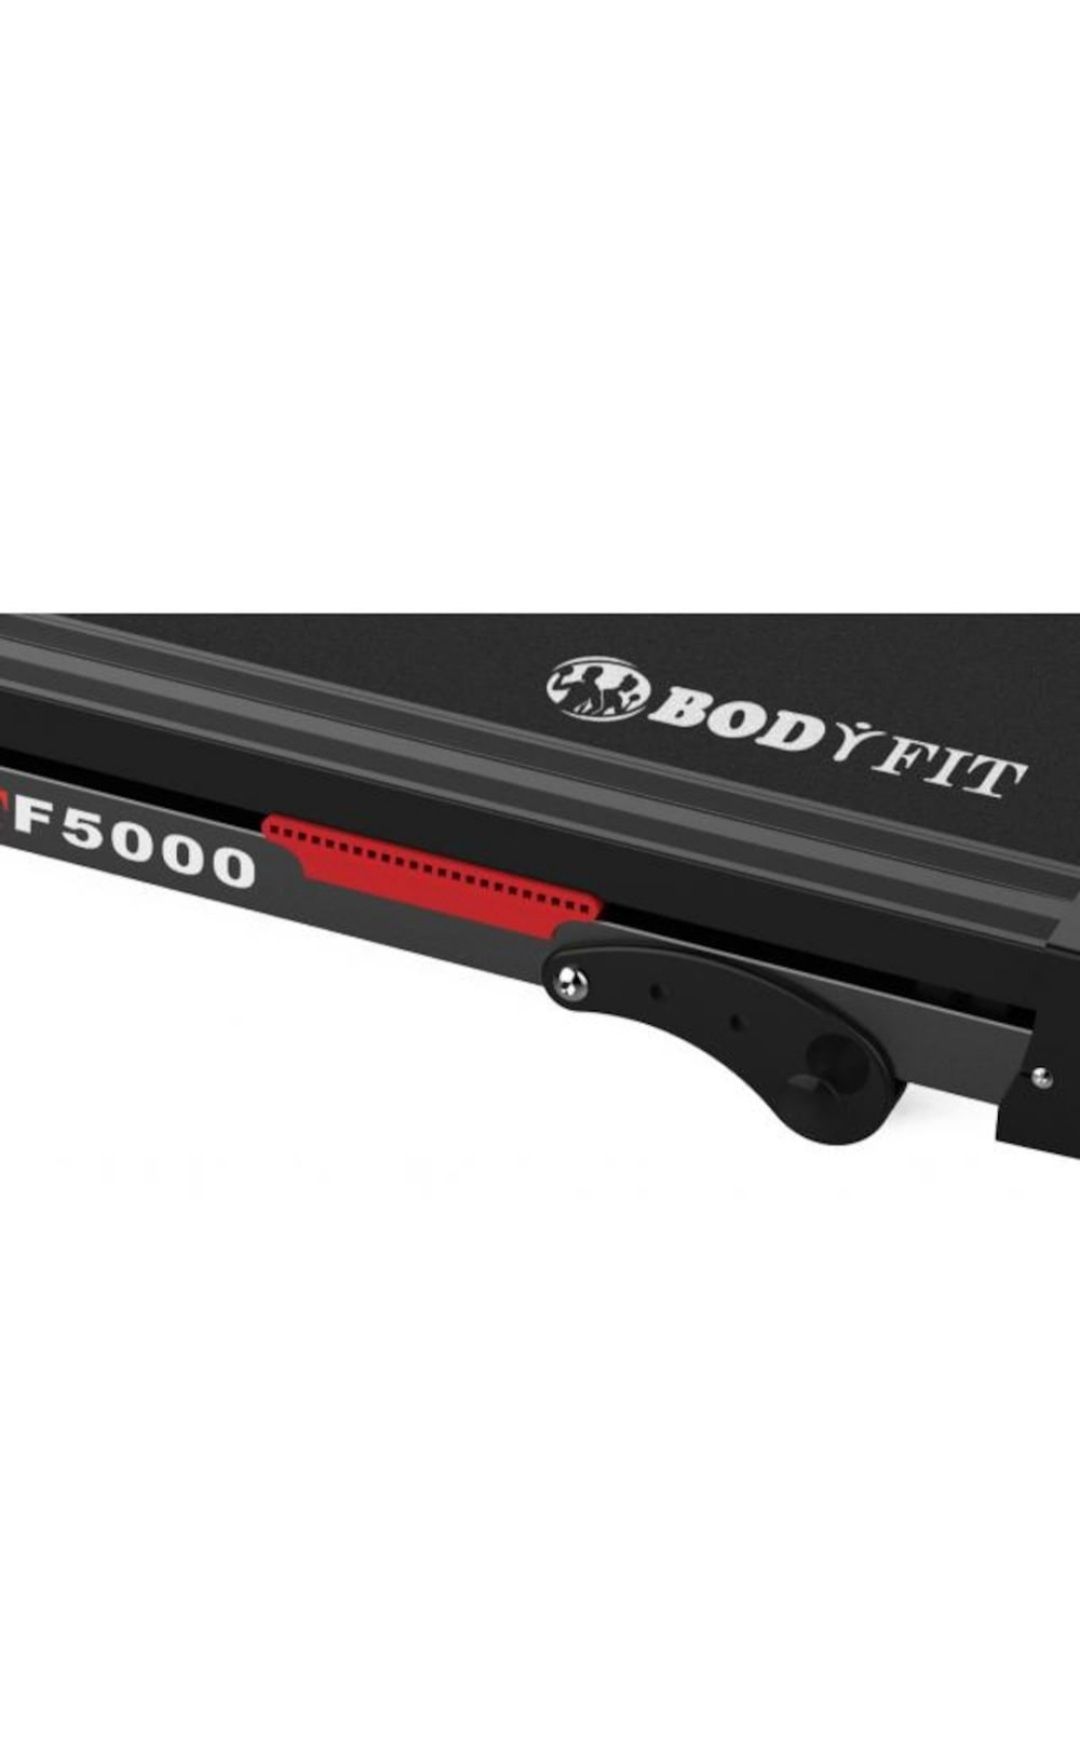 Banda de alergat electrica BodyFit F5000, motor 2.0 CP